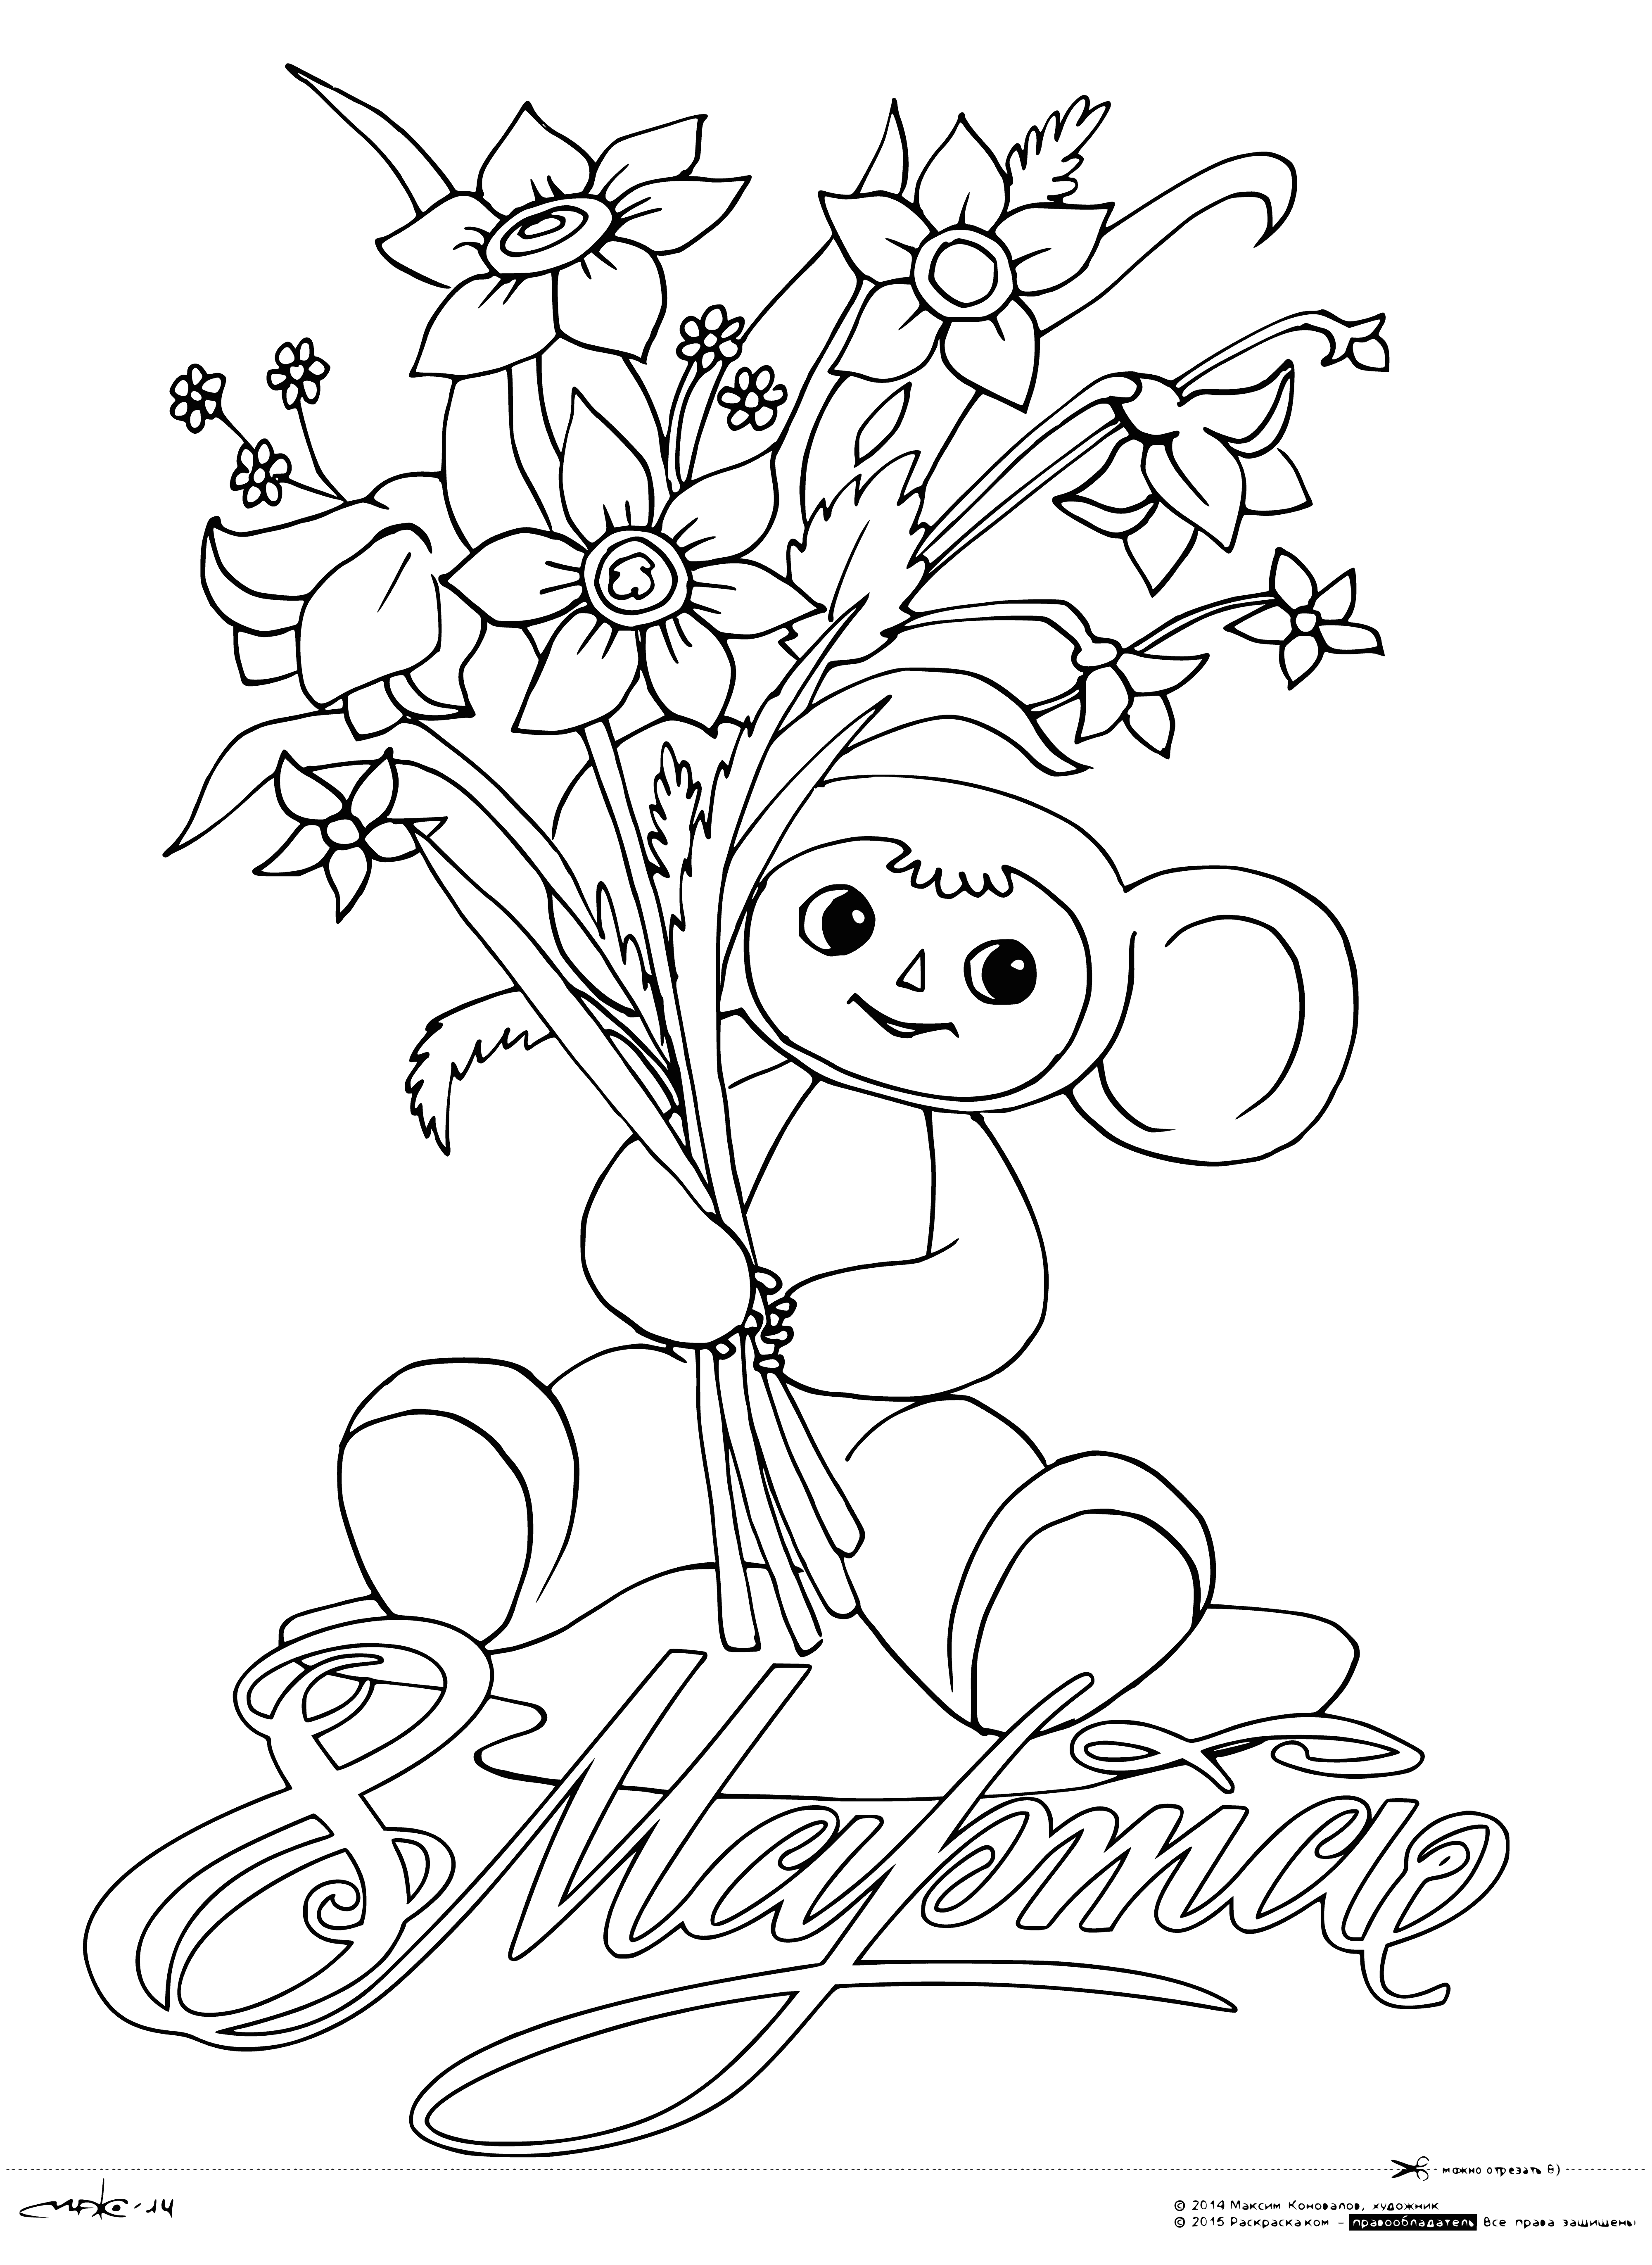 Cheburashka يعطي باقة صفحة التلوين